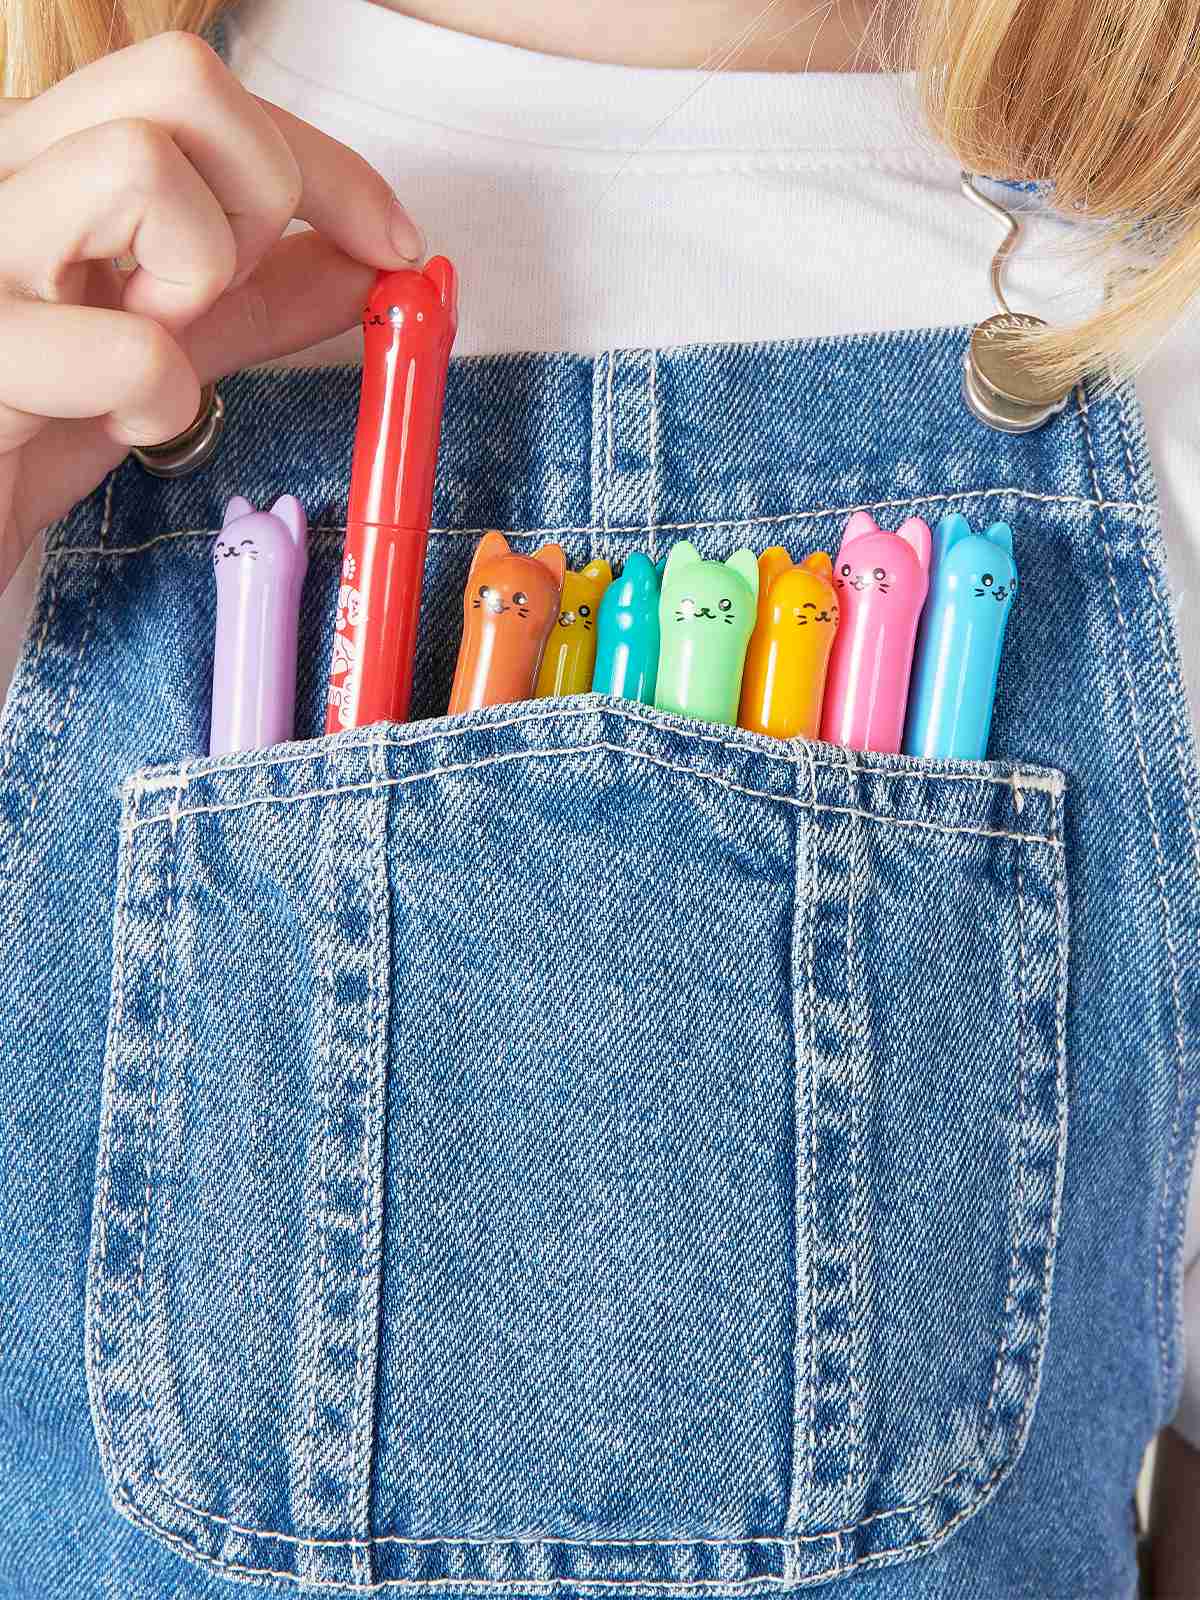 Crayola Crayons Colouring Colour Pencils Drawing Art School - Free Delivery  | eBay